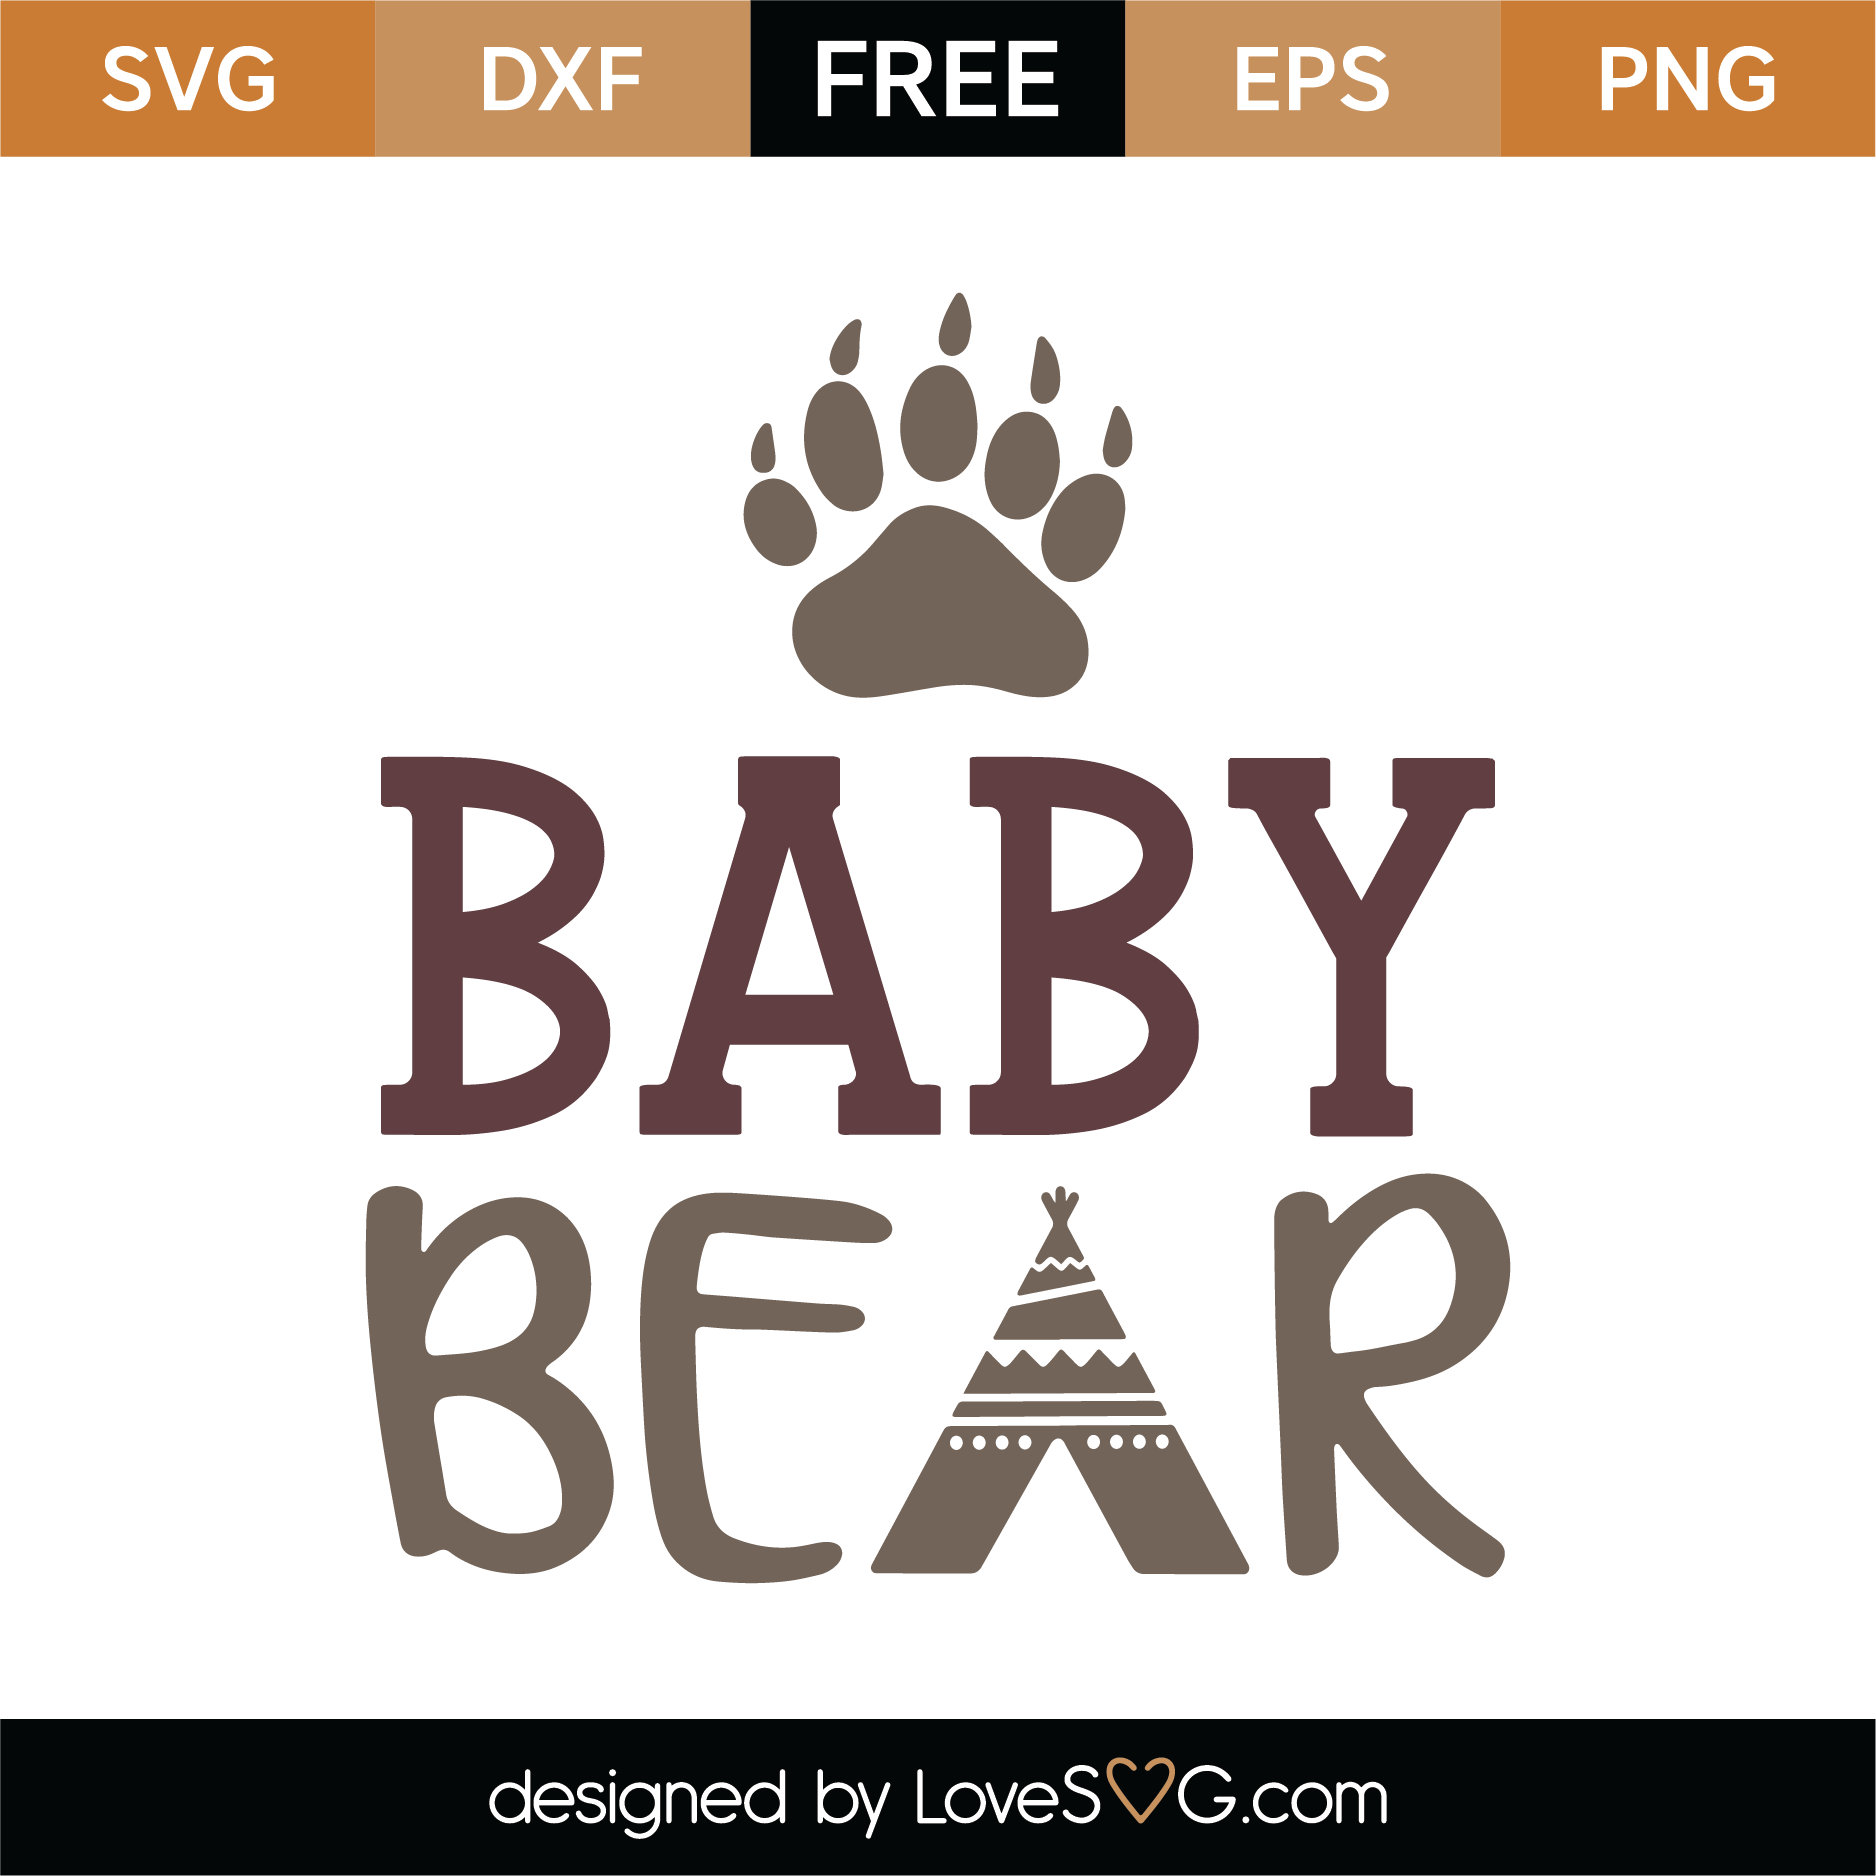 Free Baby Bear SVG Cut File | Lovesvg.com